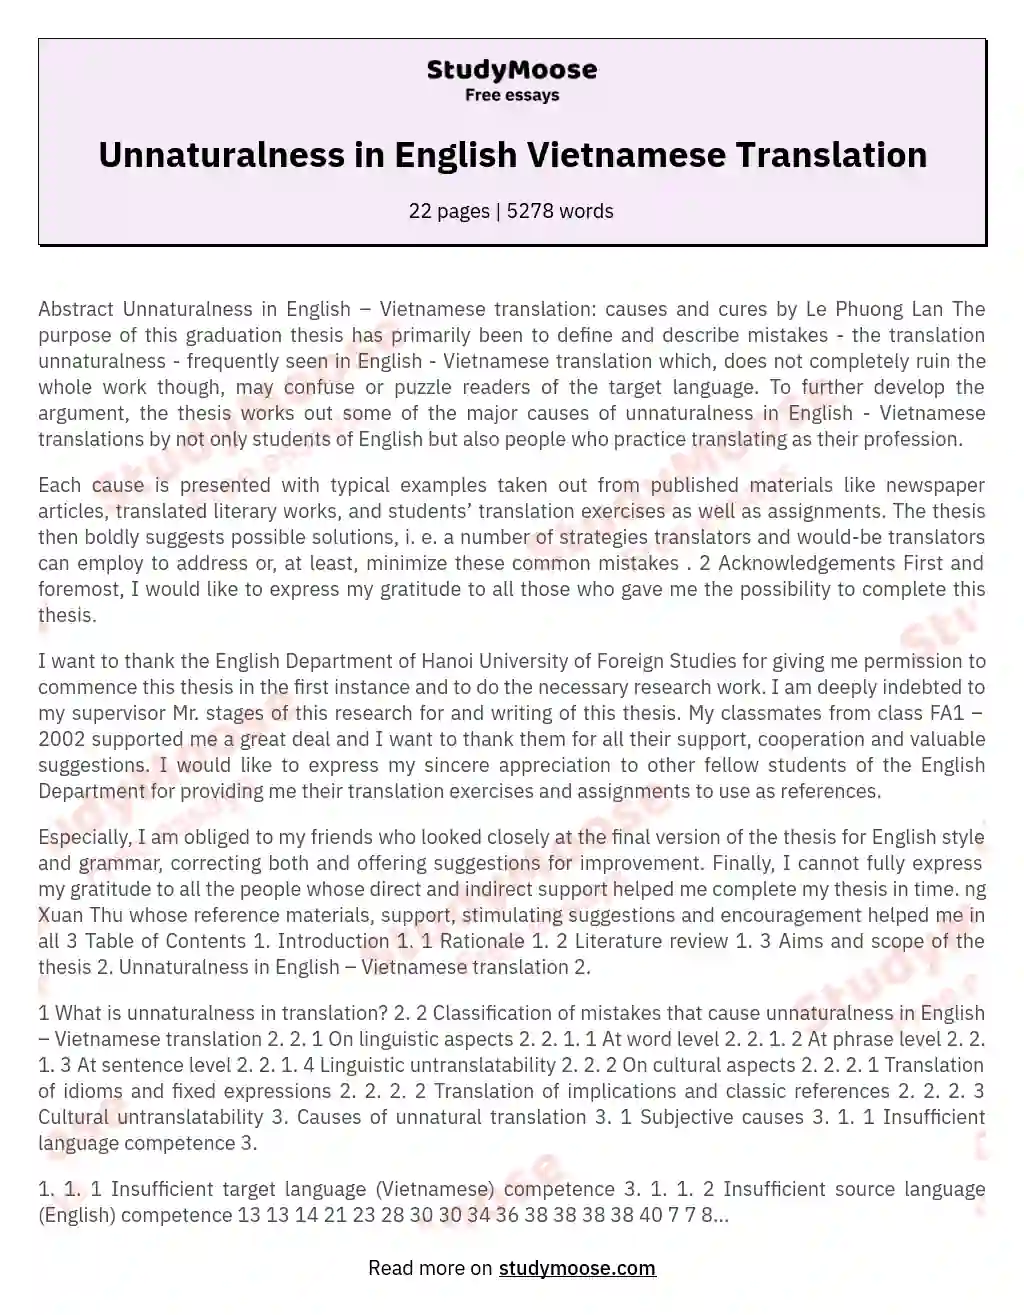 Unnaturalness in English Vietnamese Translation essay